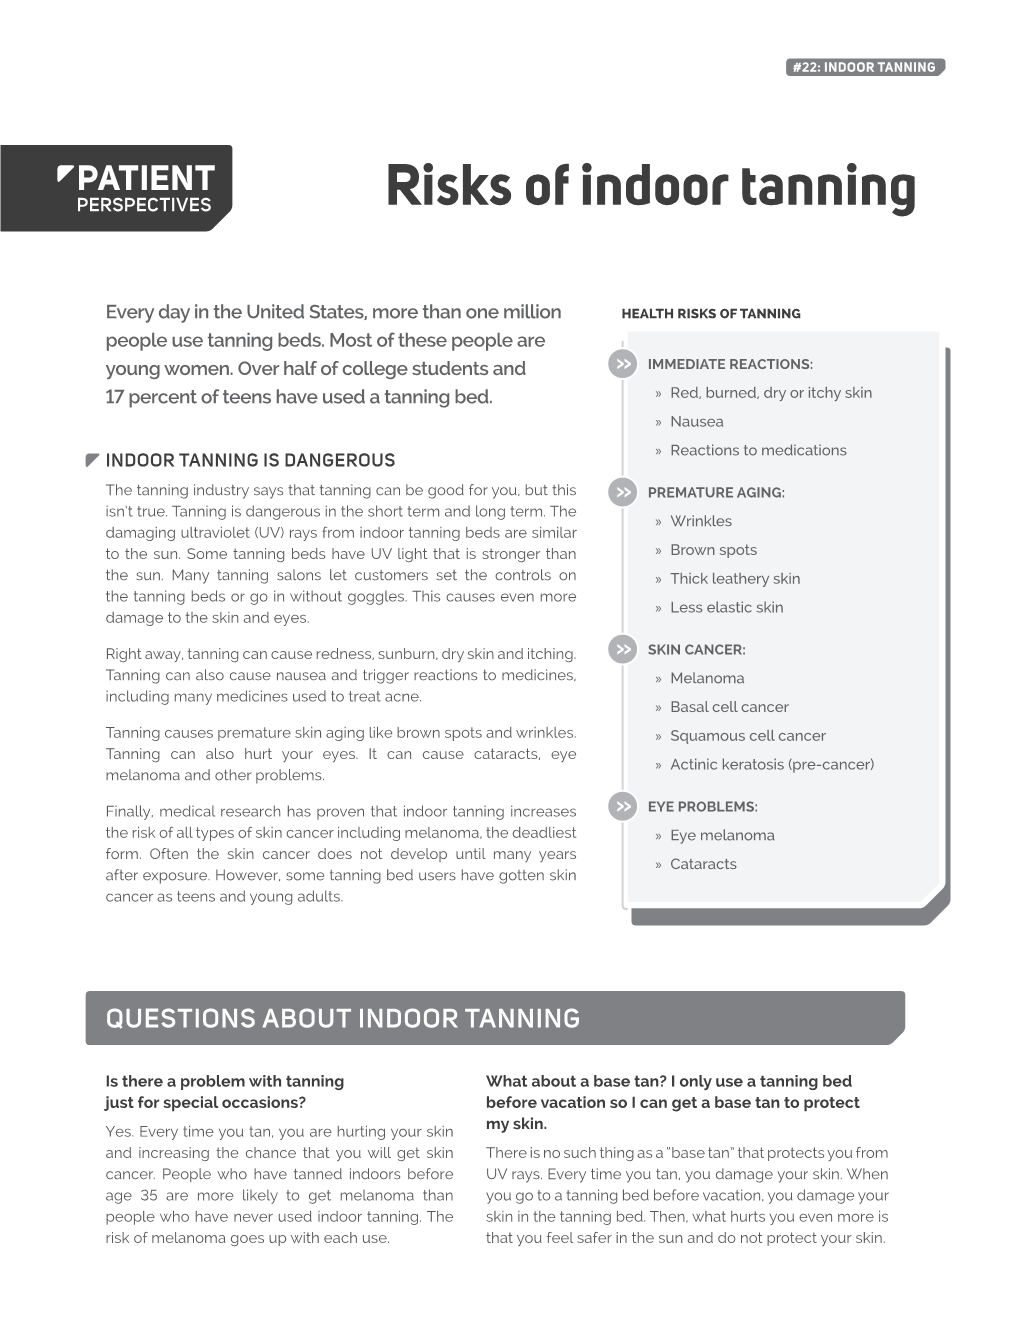 Risks of Indoor Tanning